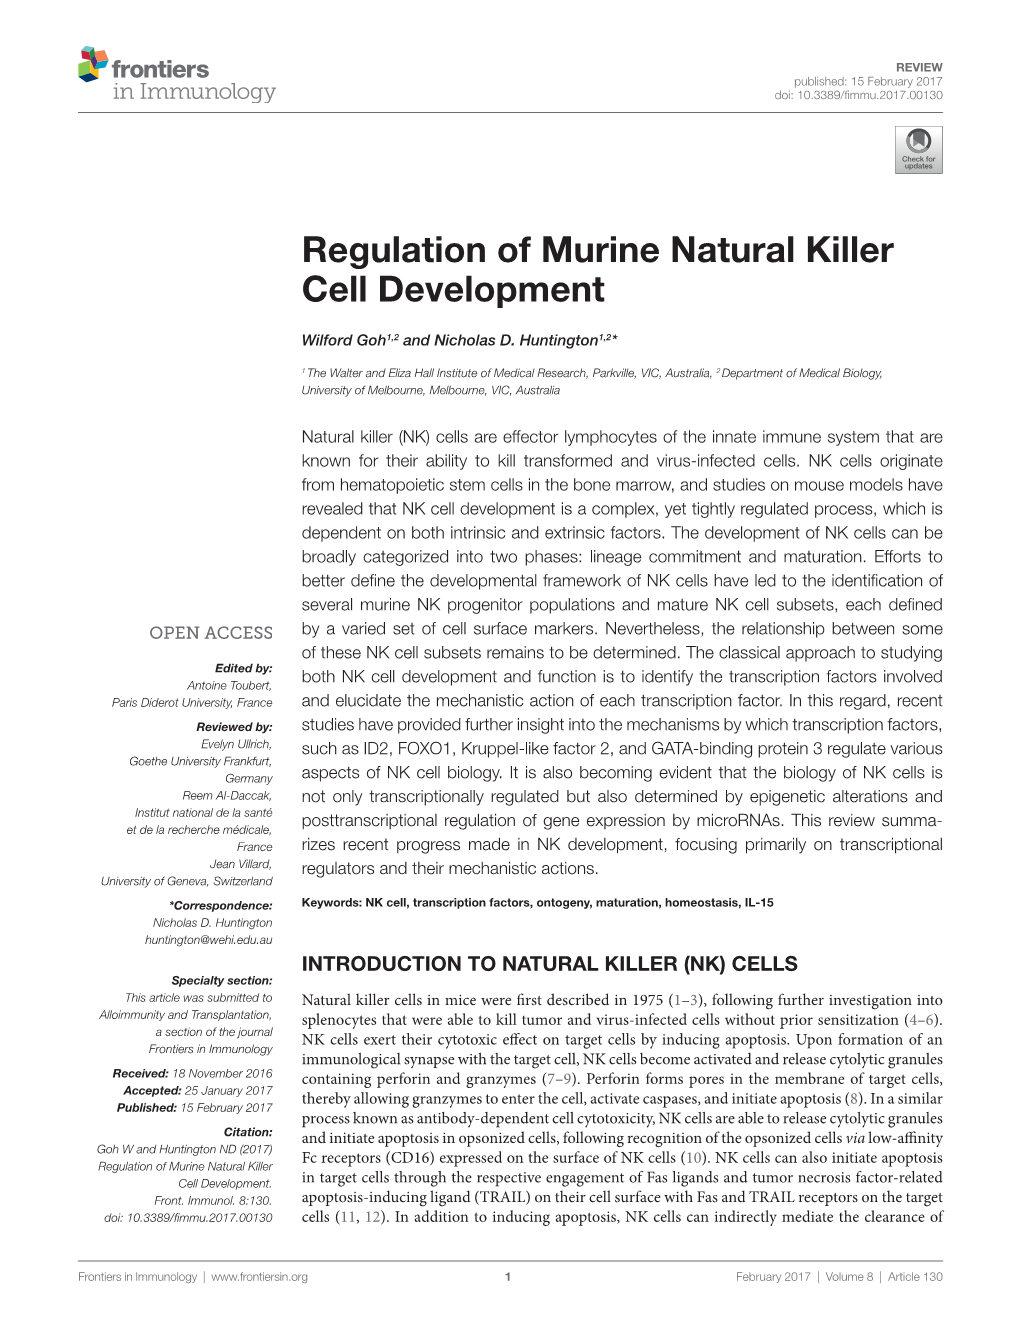 Regulation of Murine Natural Killer Cell Development